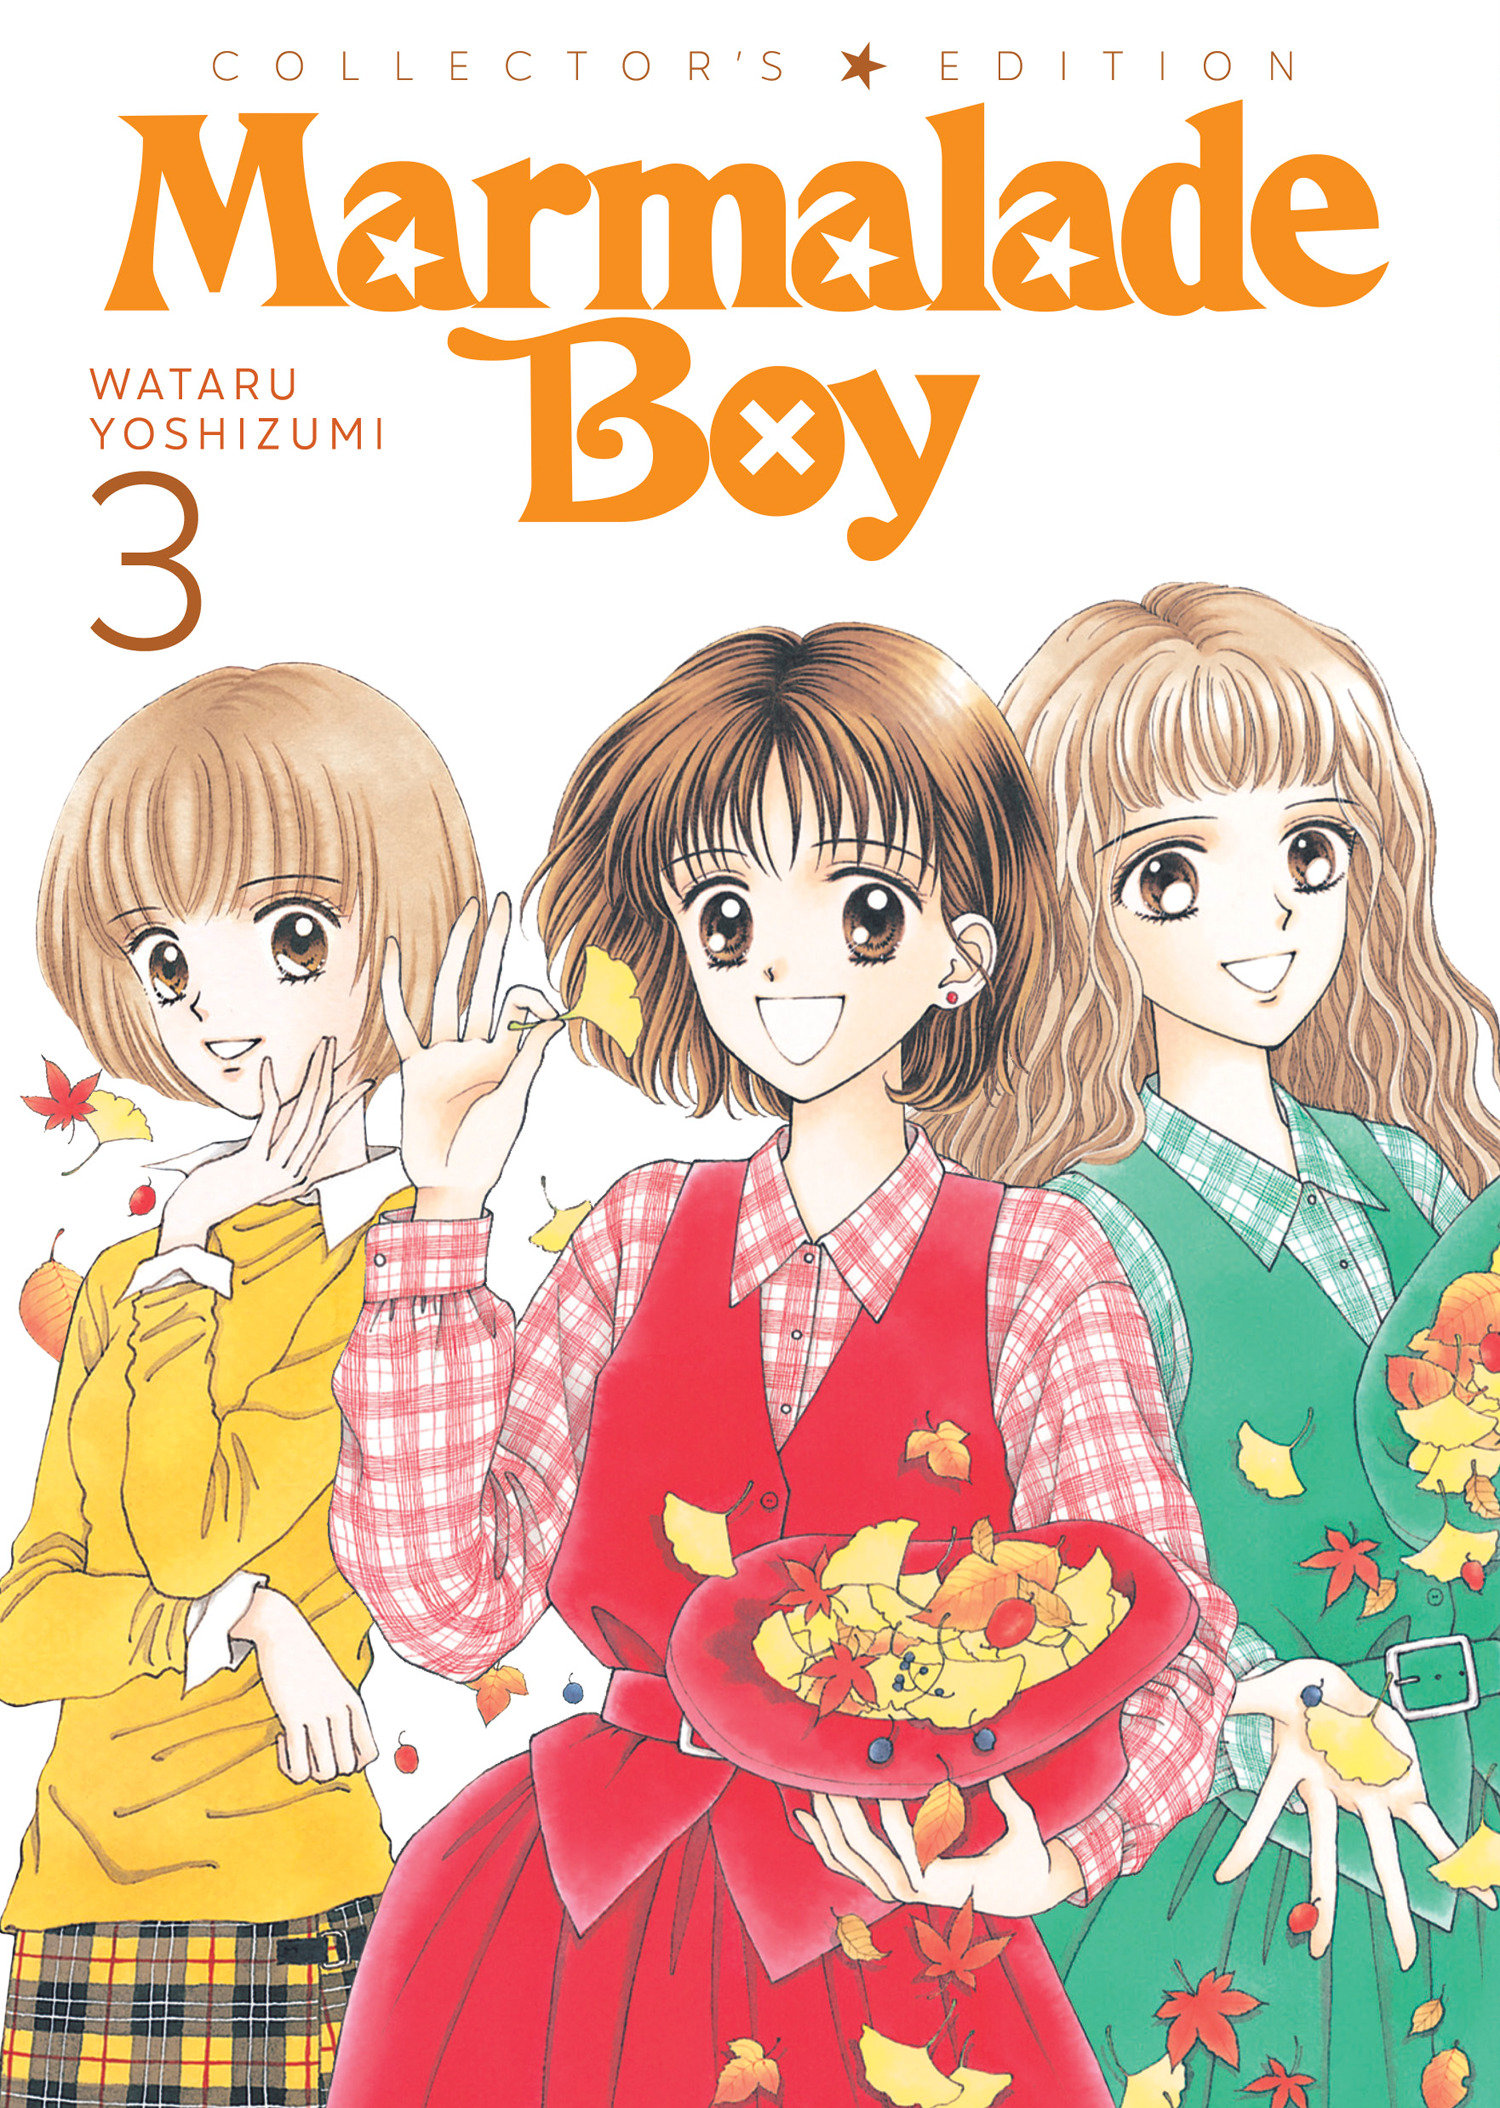 Marmalade Boy Collected Edition Manga Volume 3